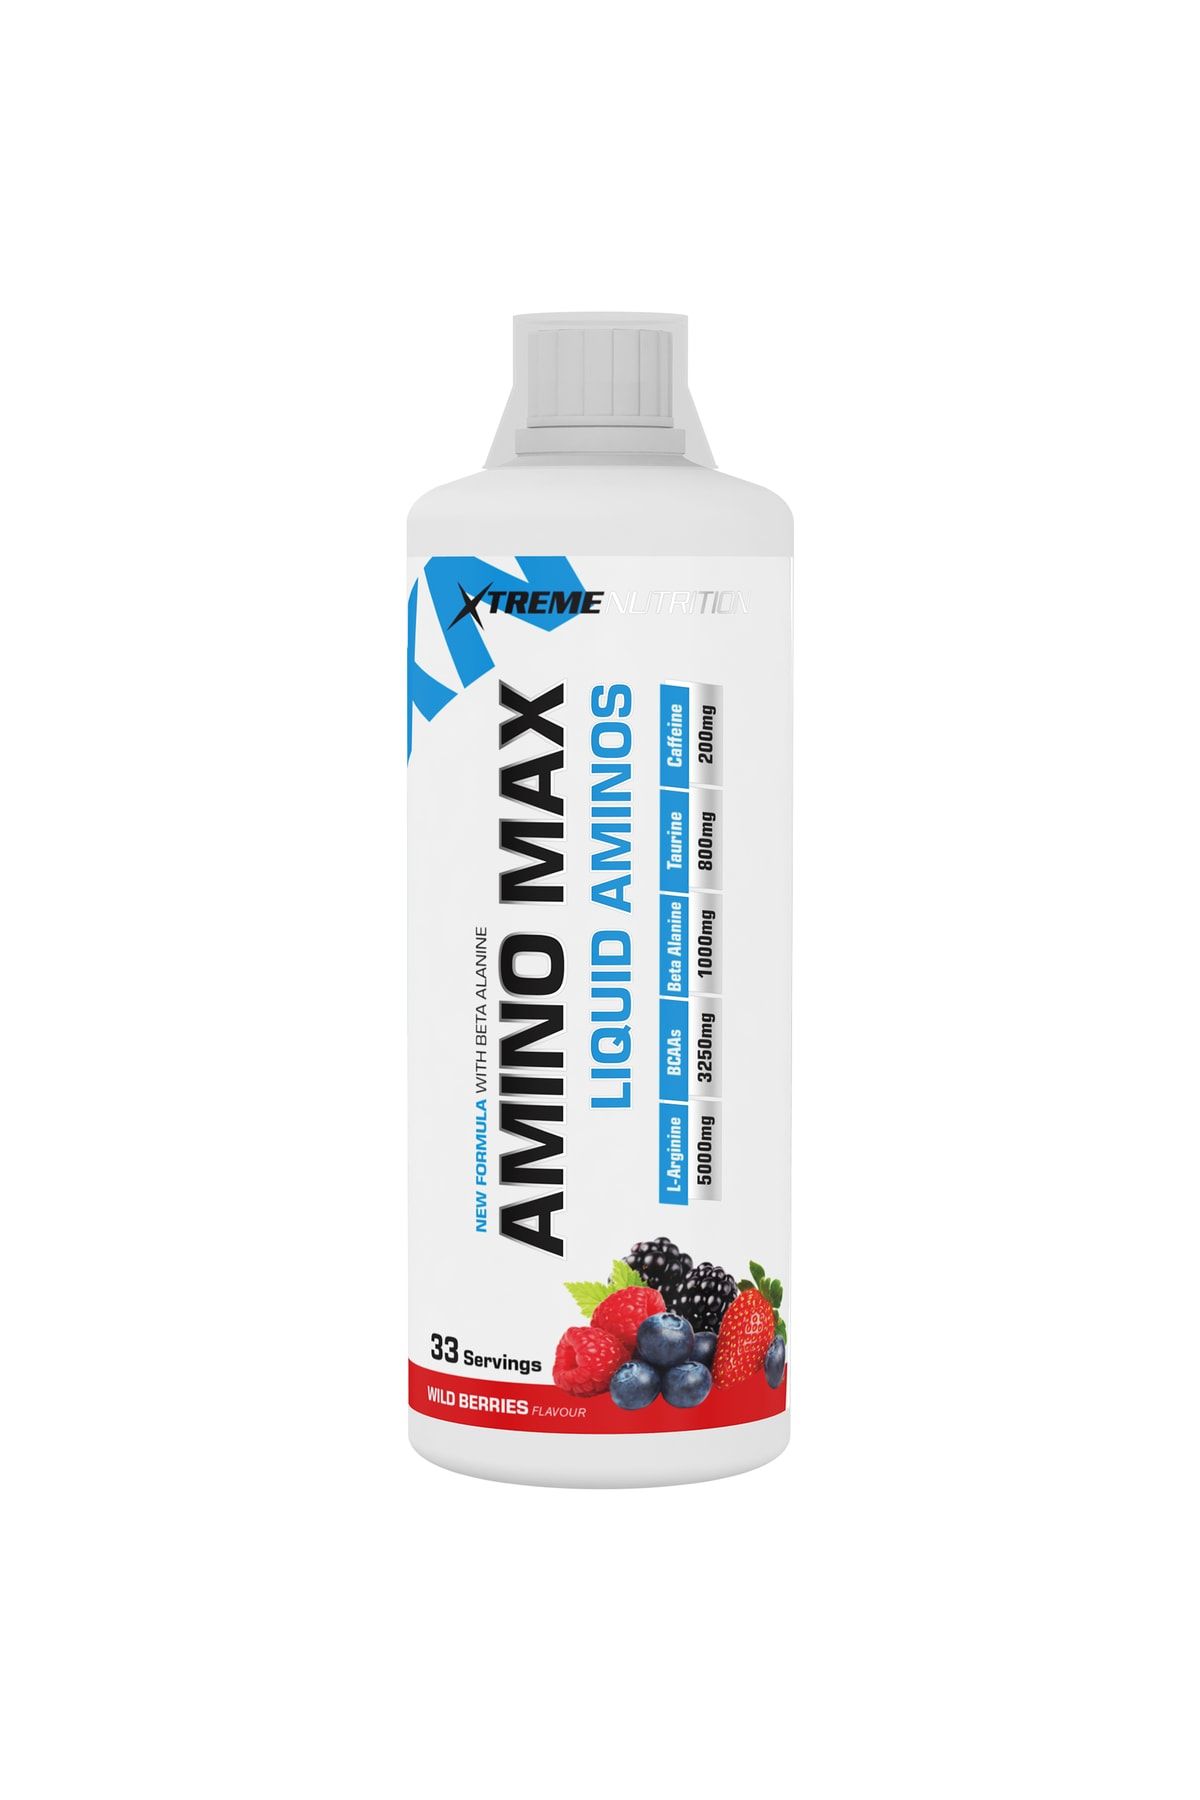 Xtreme Nutrition Xtreme Amino Max Liquid Aminos 15,200 Mg 1000 ml - 33 Servis (ORMAN MEYVELİ) Pre Workout